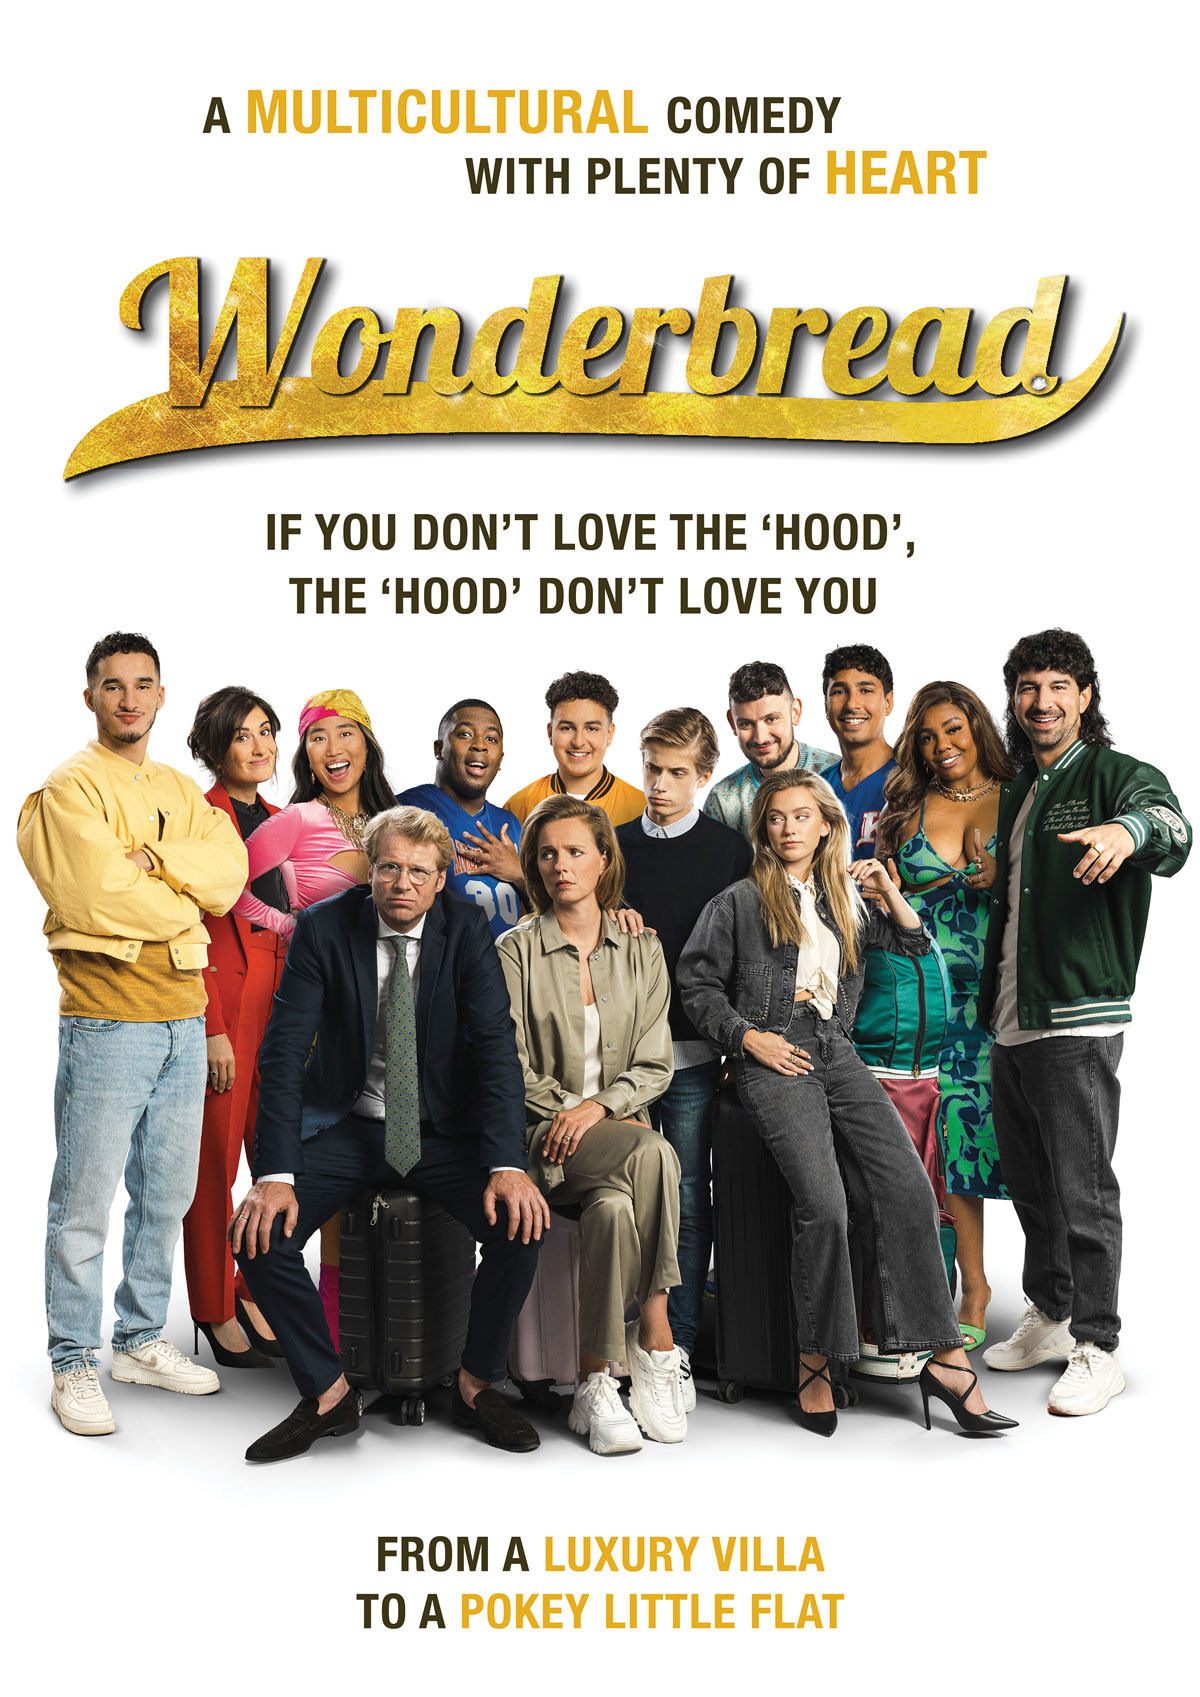 Wonderbread poster image